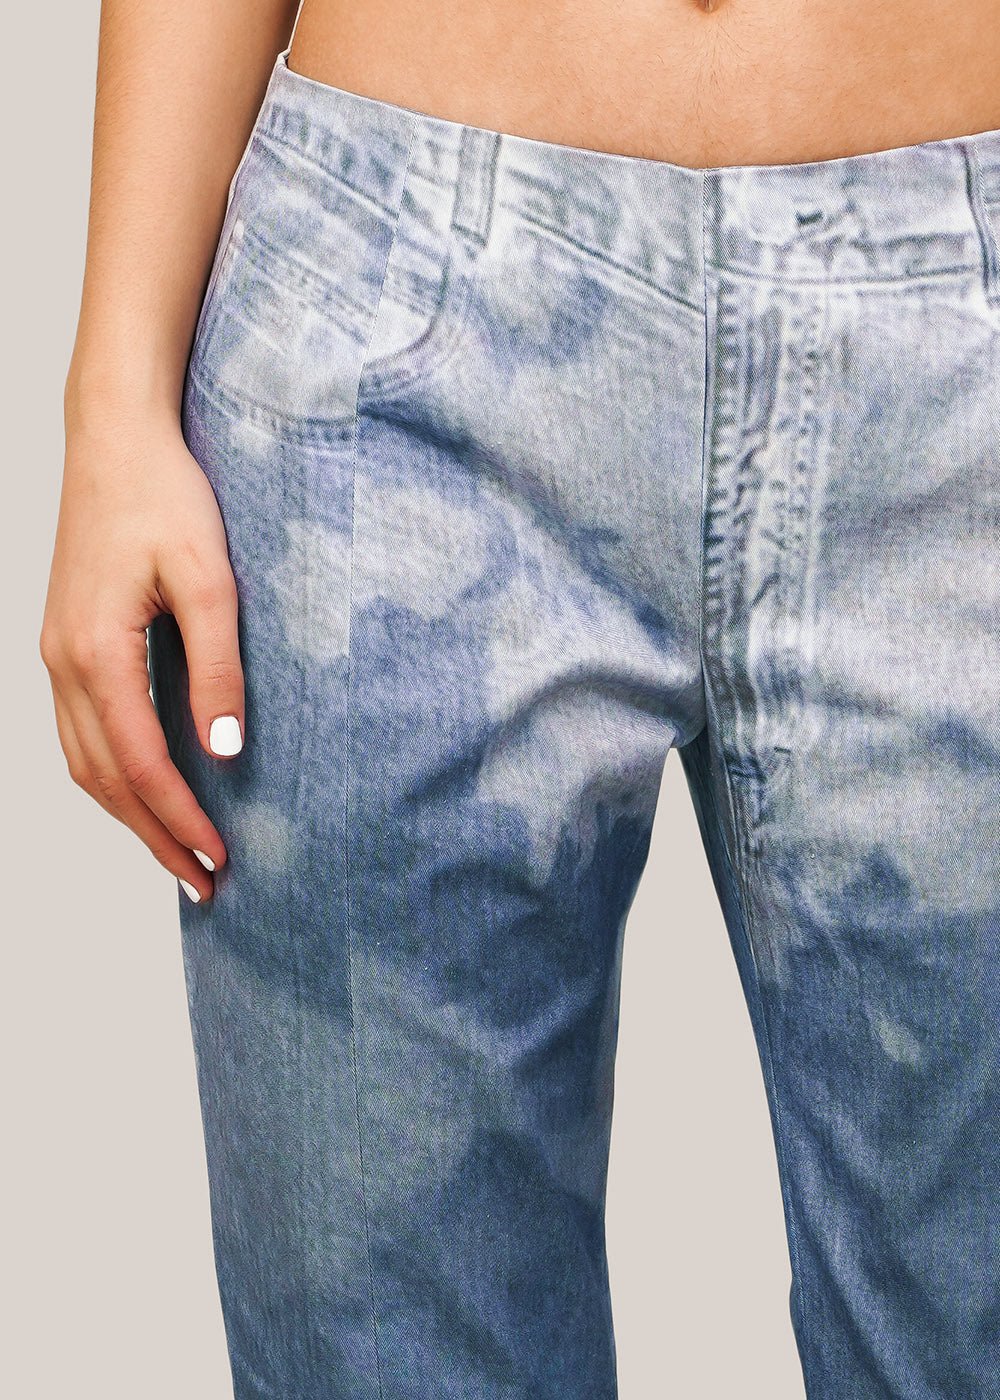 Handy Jean Print Denim Trousers